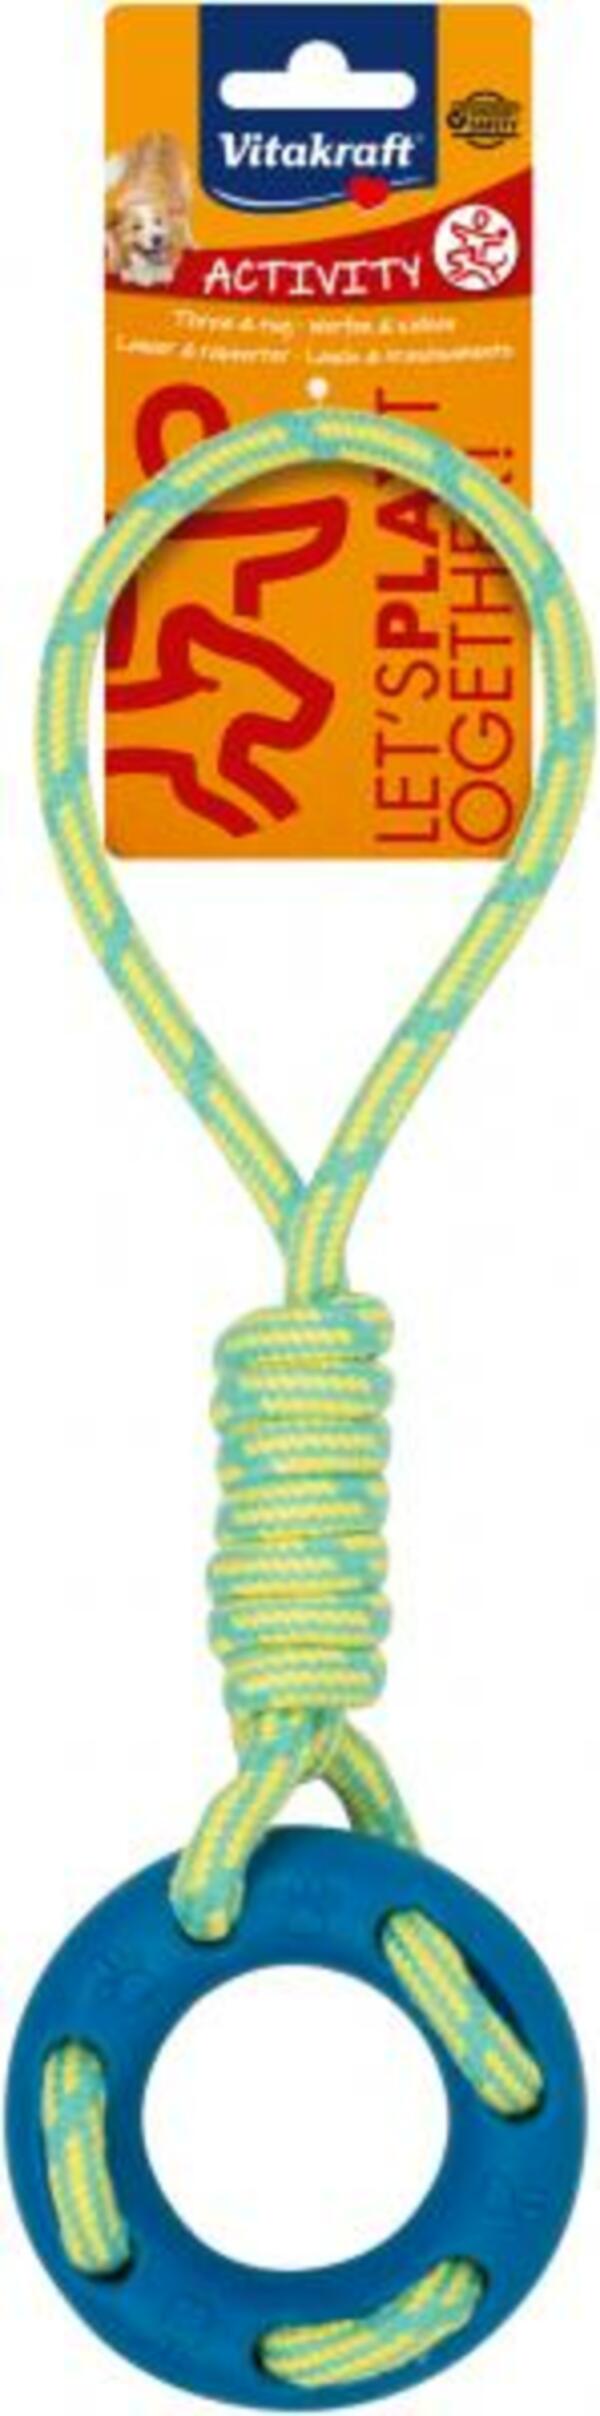 Bild 1 von Vitakraft Activity Hundespielzeug Ring mit Seil